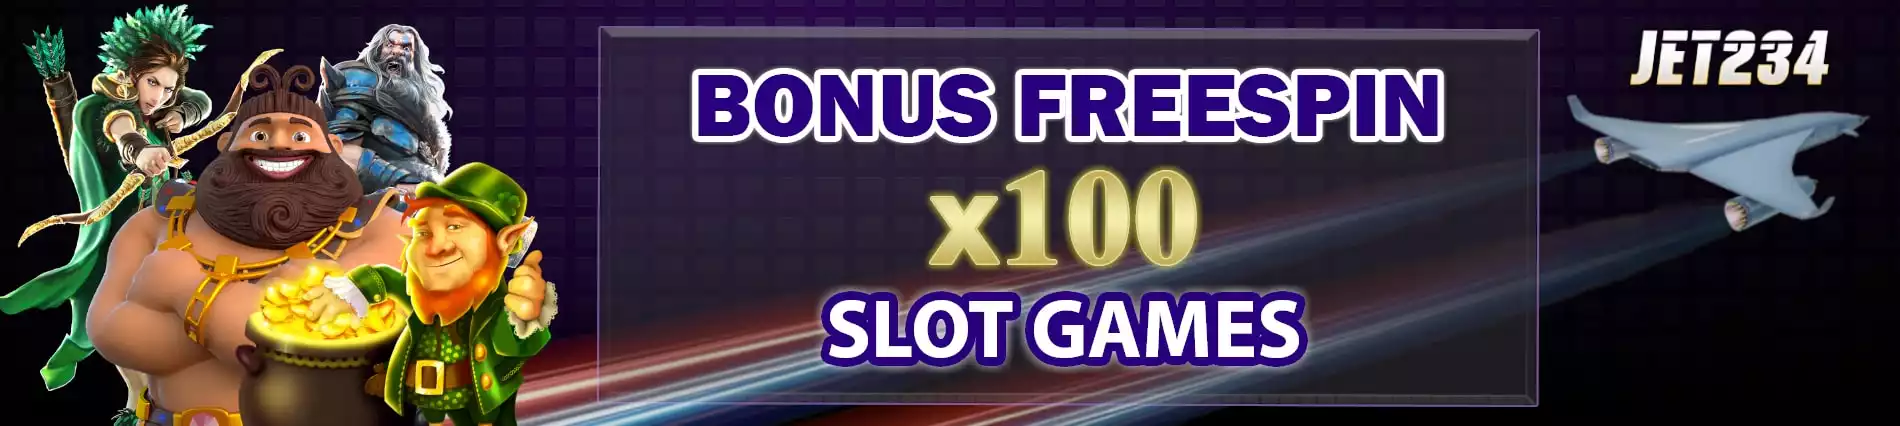 Bonus Freespin 100x Slot Games